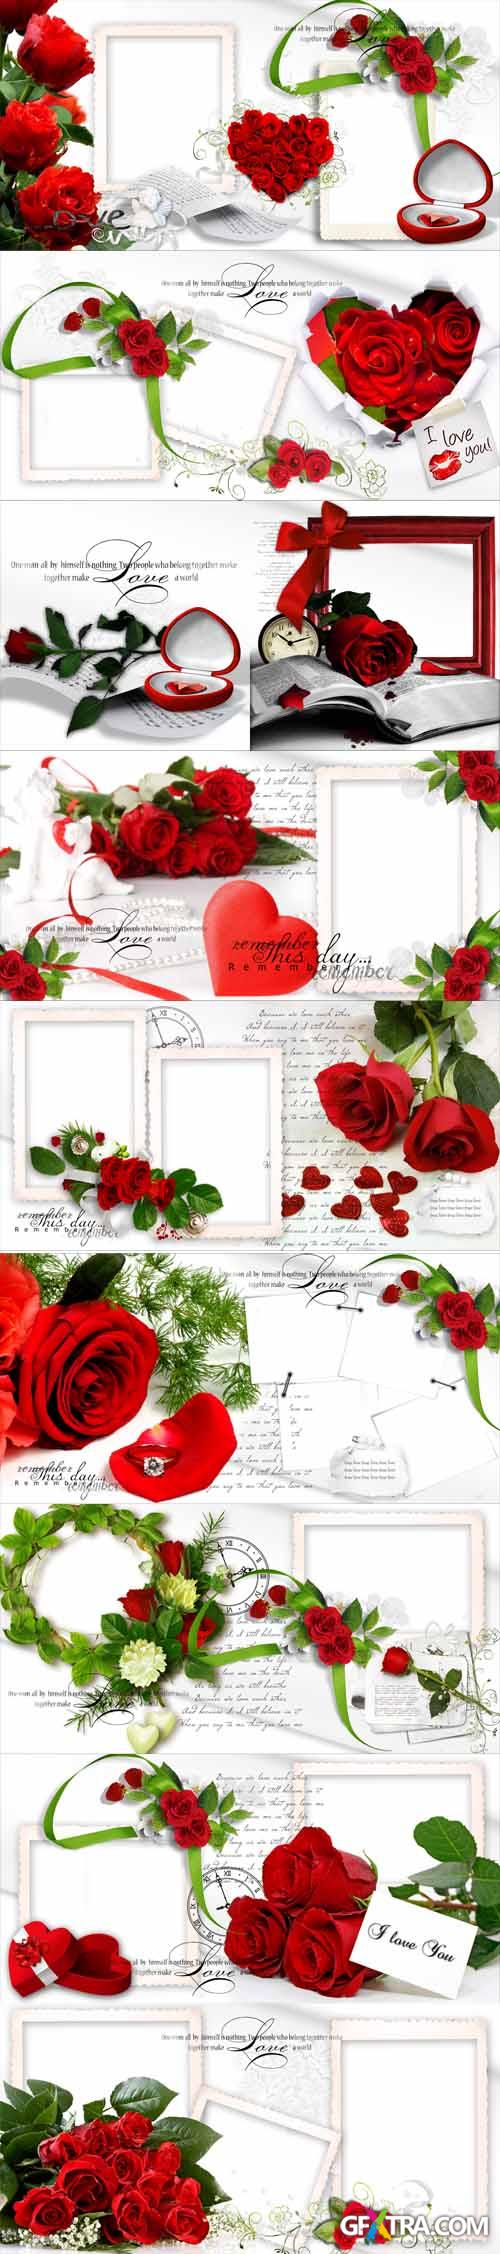 Romantic Wedding Photobook 1 - Red Rose